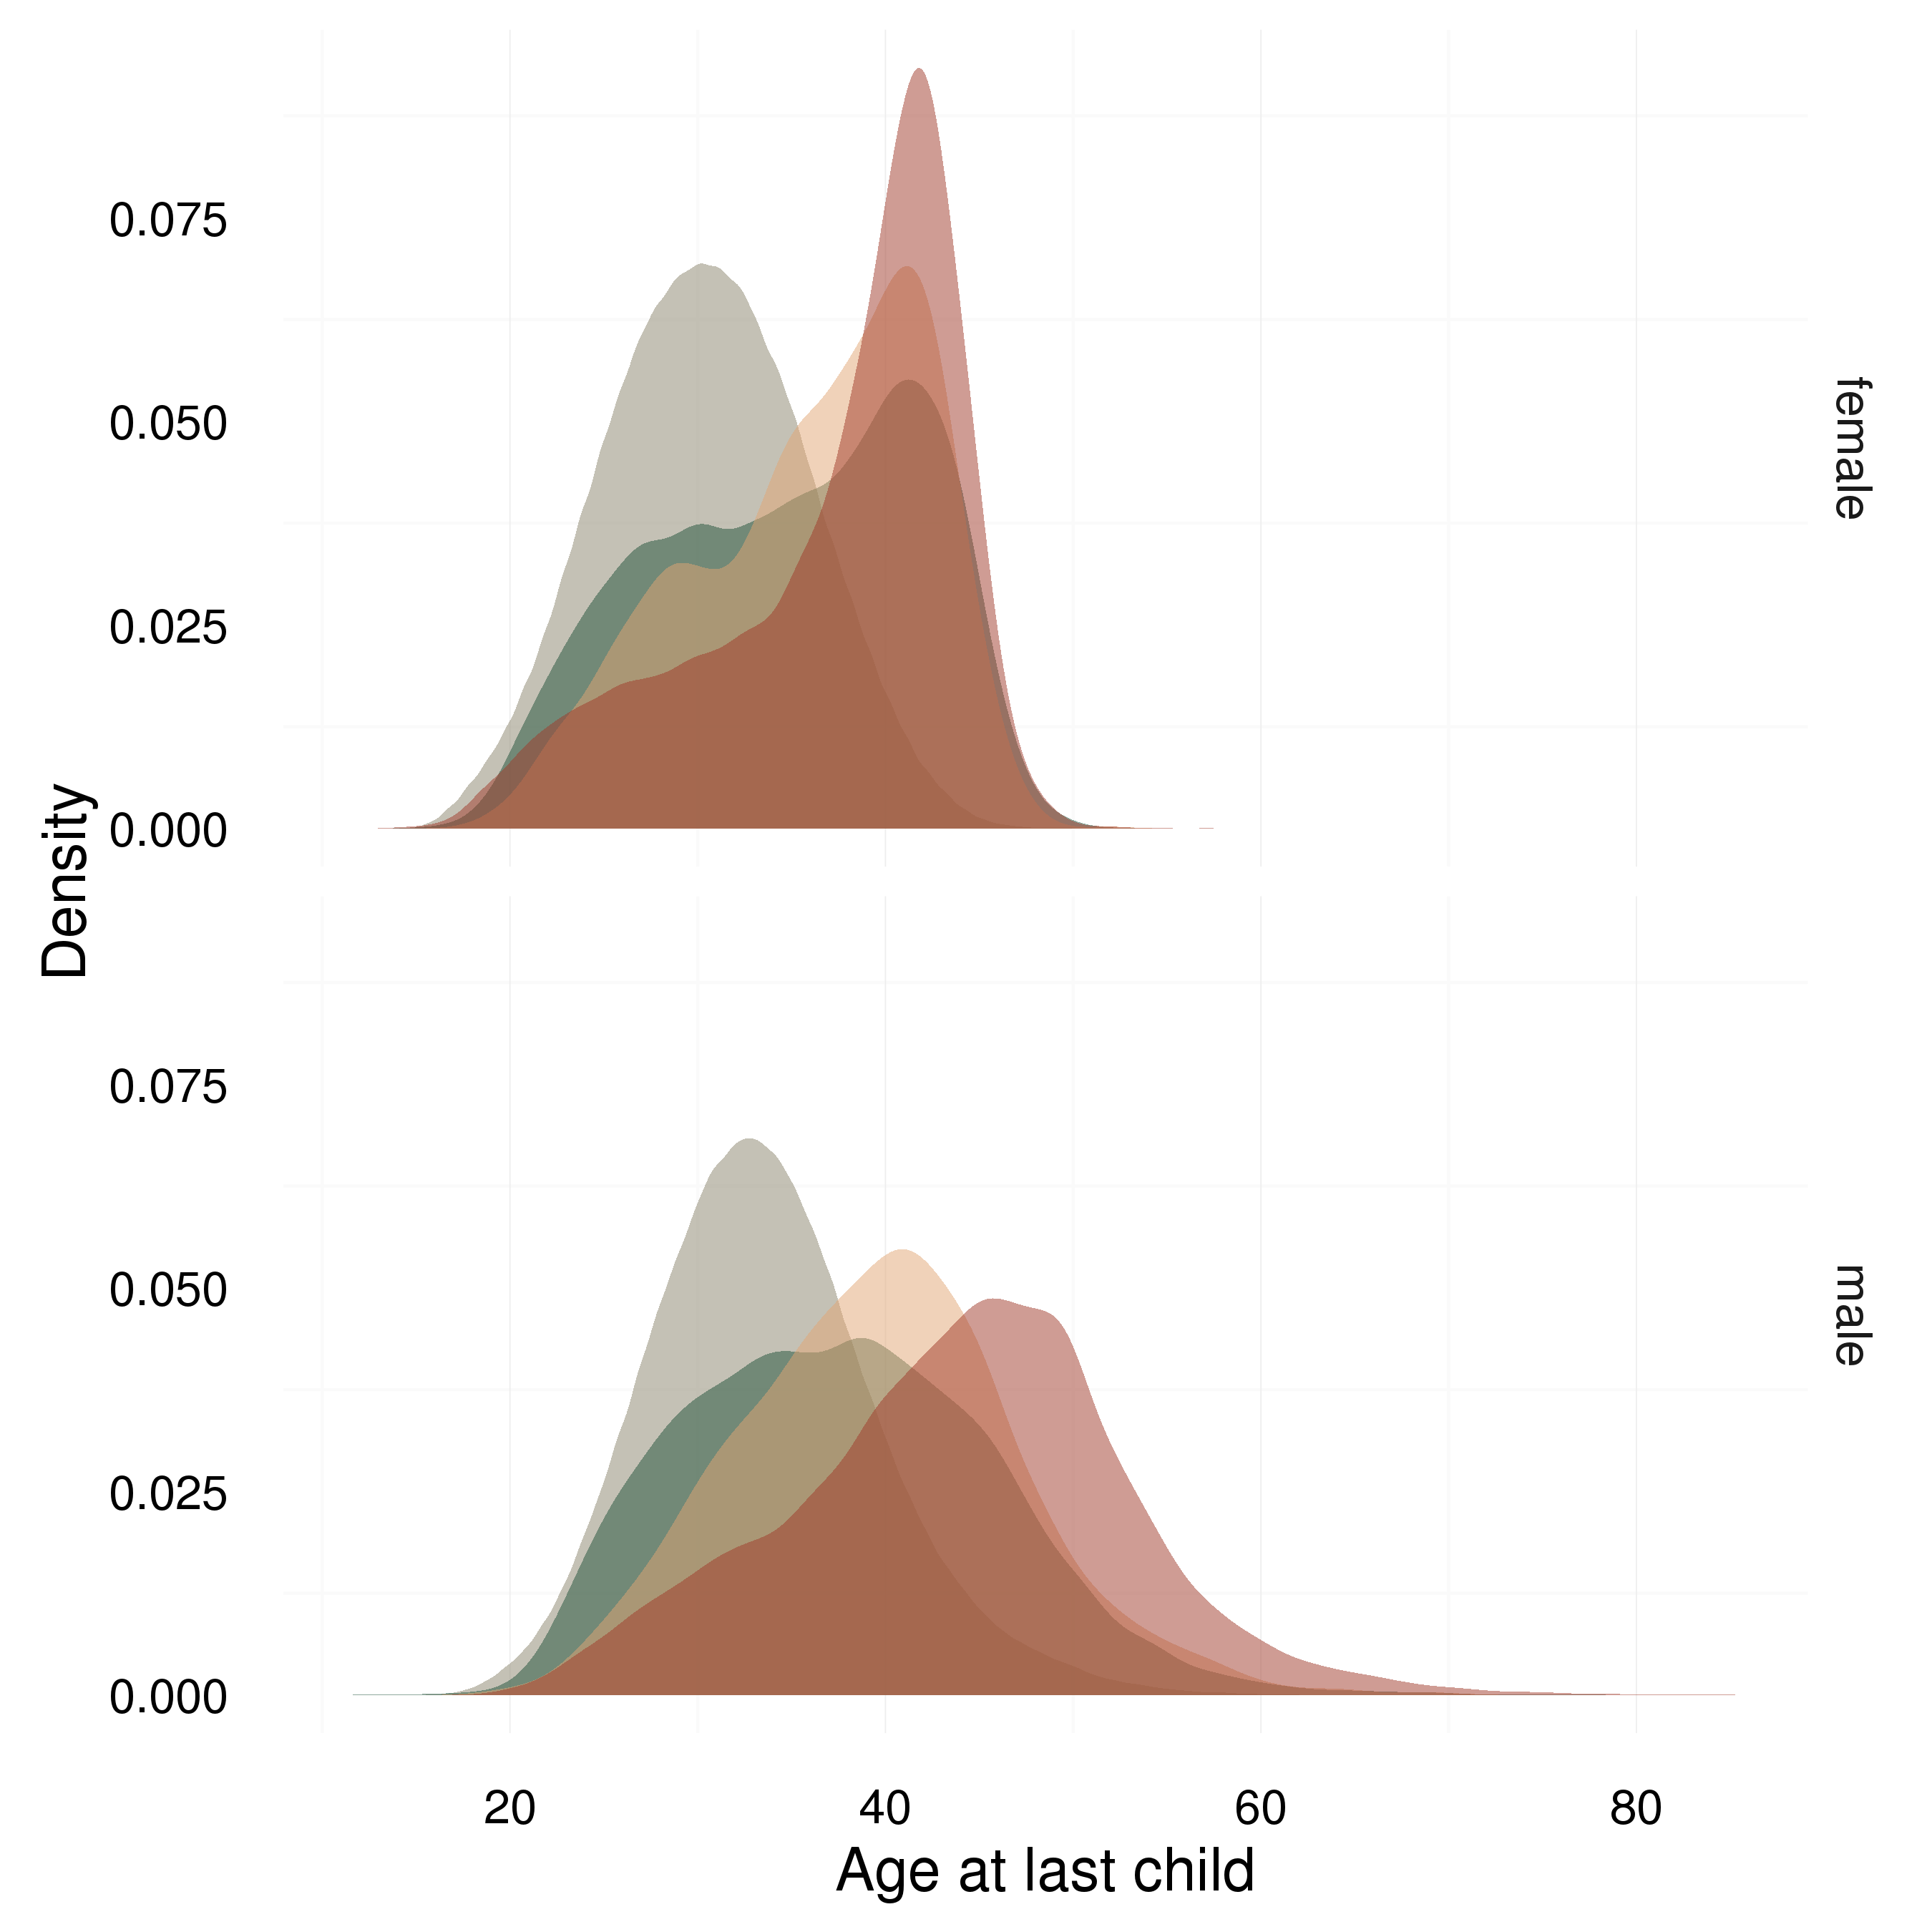 Age at last child much lower in modern Sweden